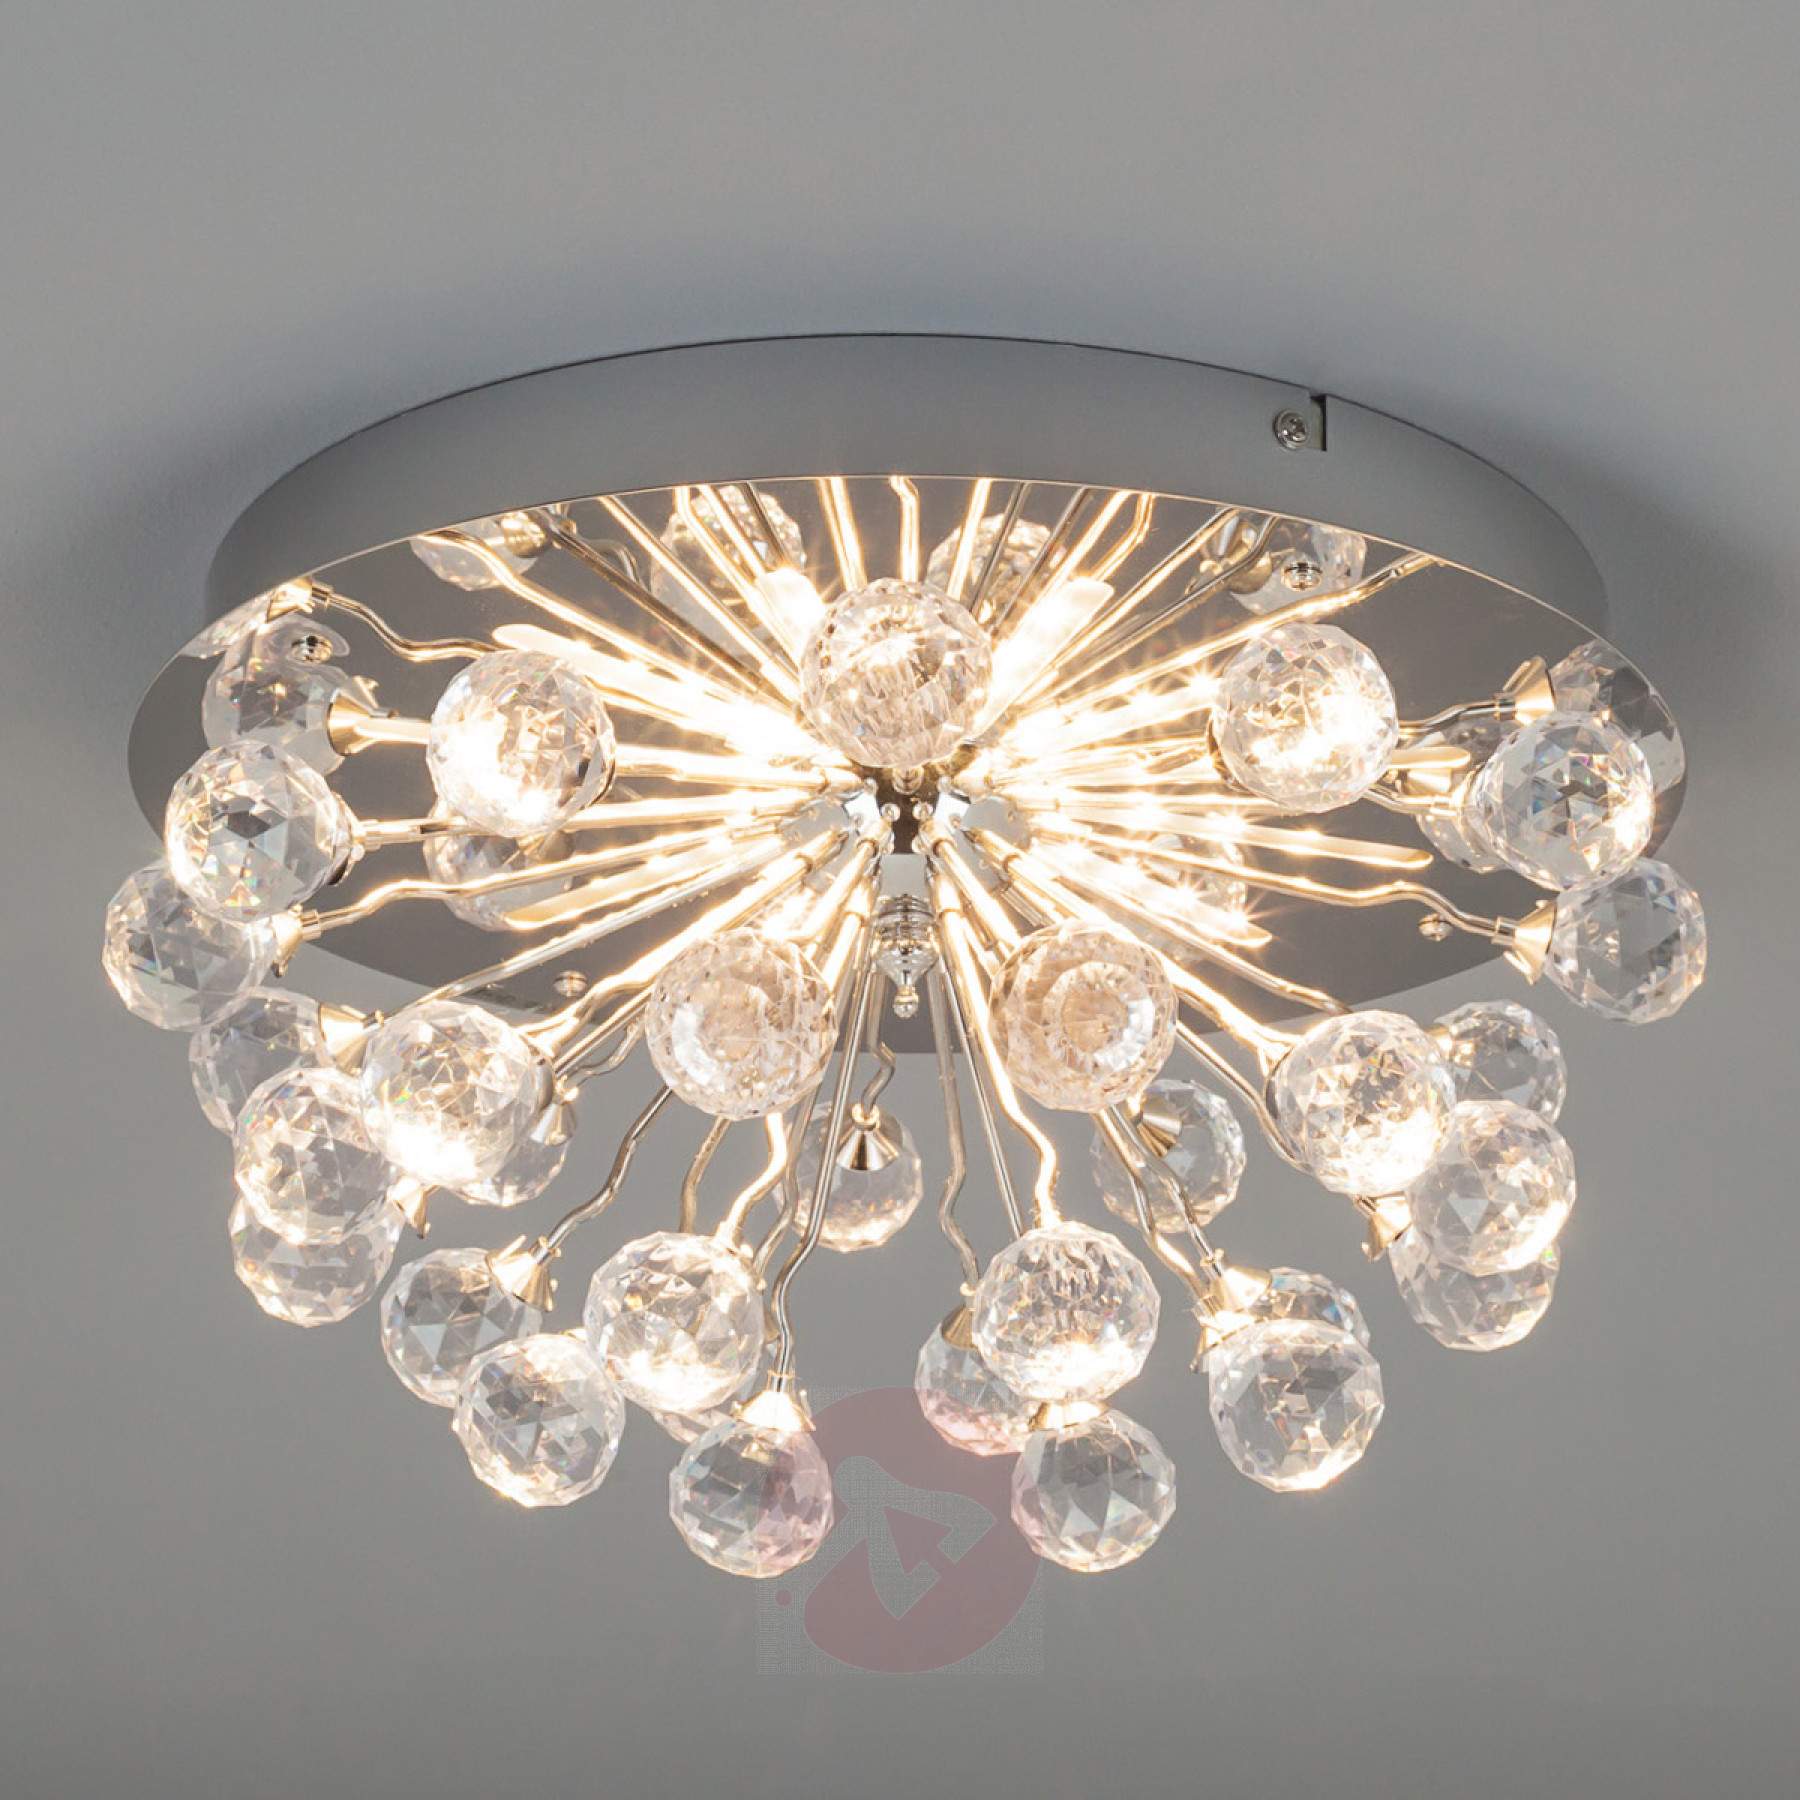 Appealing LED ceiling light Theodora | Lights.co.uk